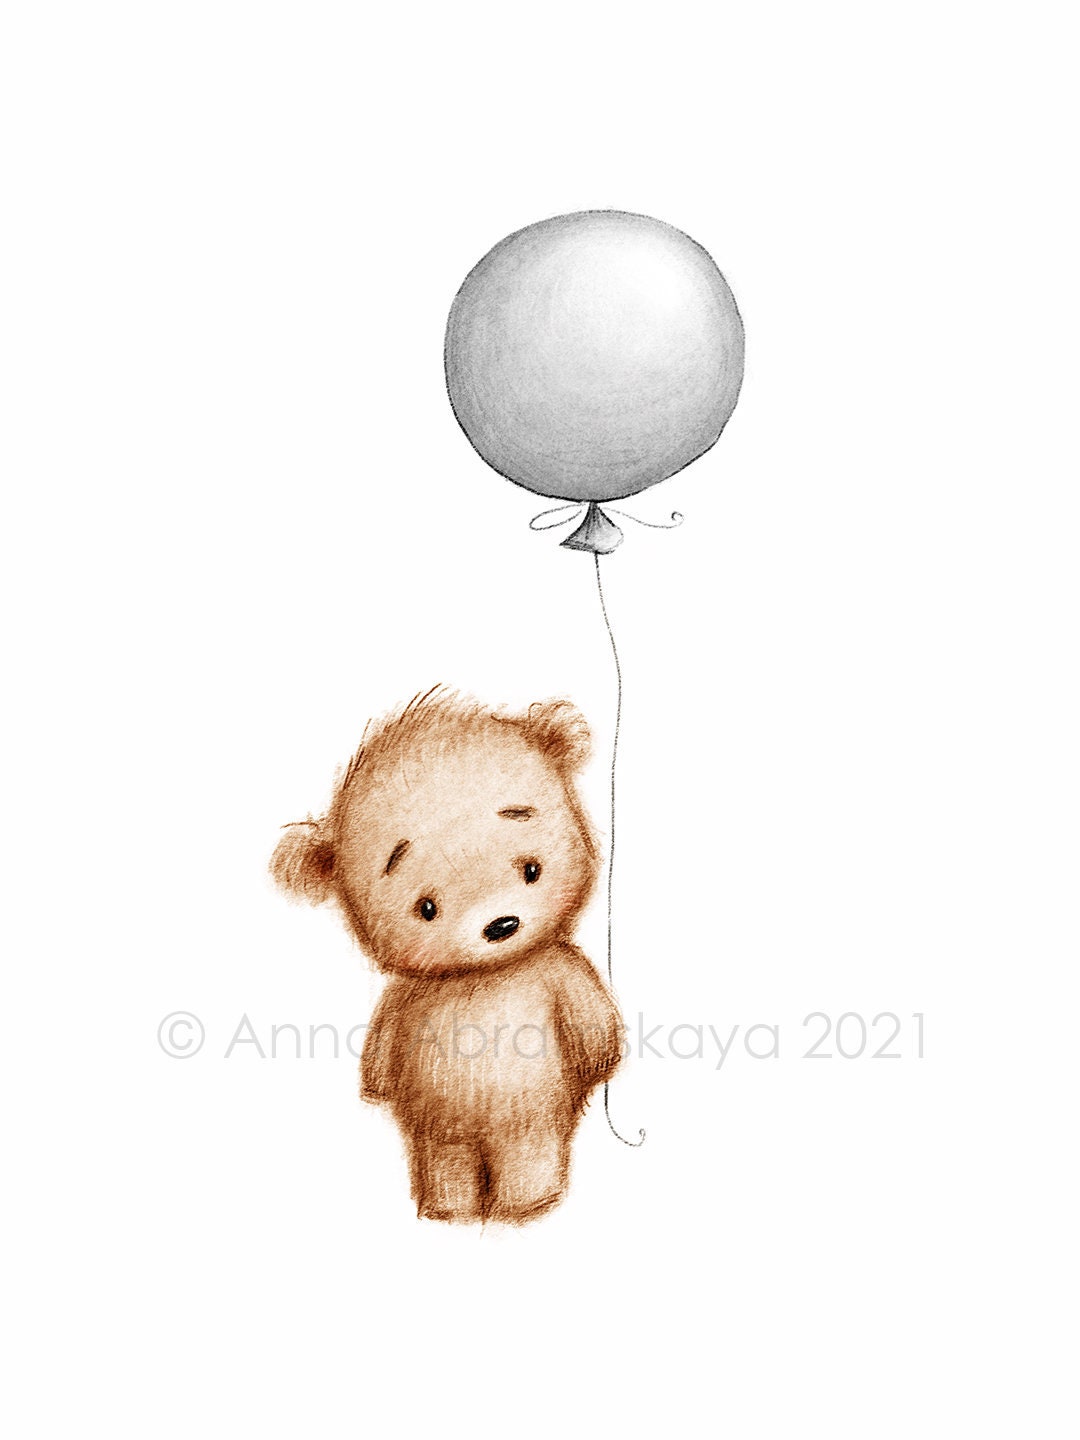 10 Lovely Teddy Bear Drawings for Inspiration 2023